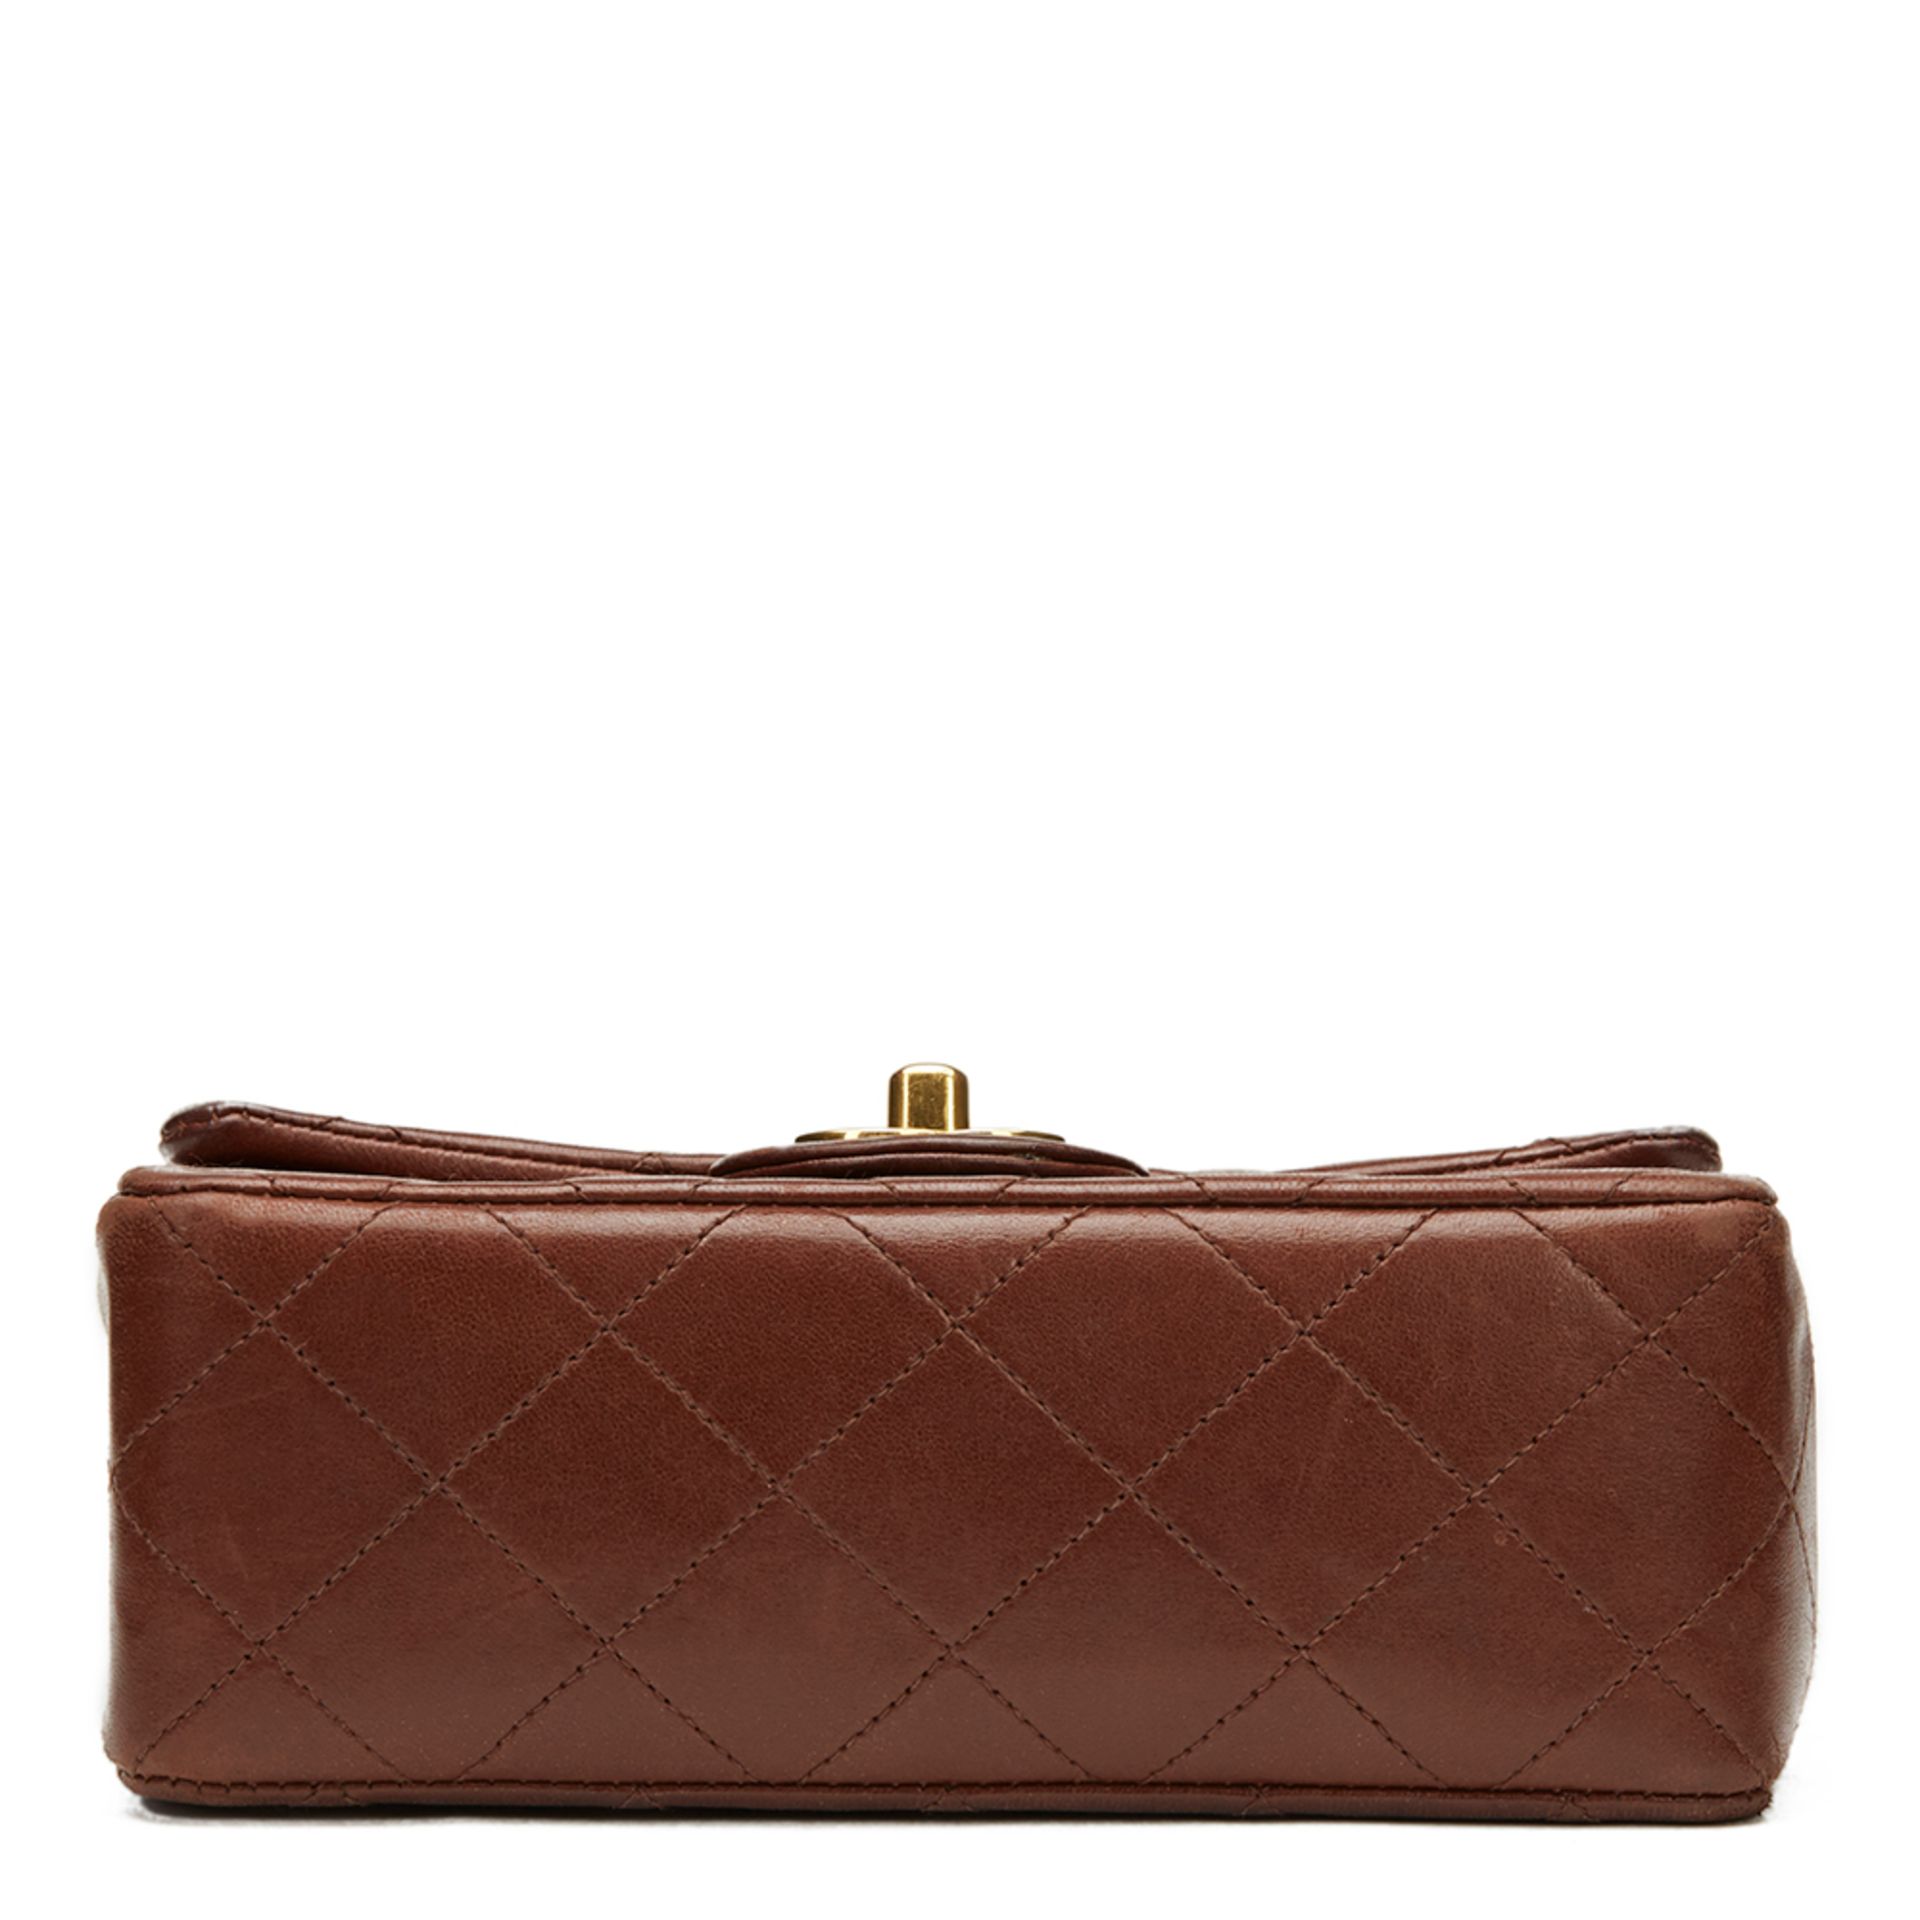 Chanel Mini Flap Bag - Image 5 of 11